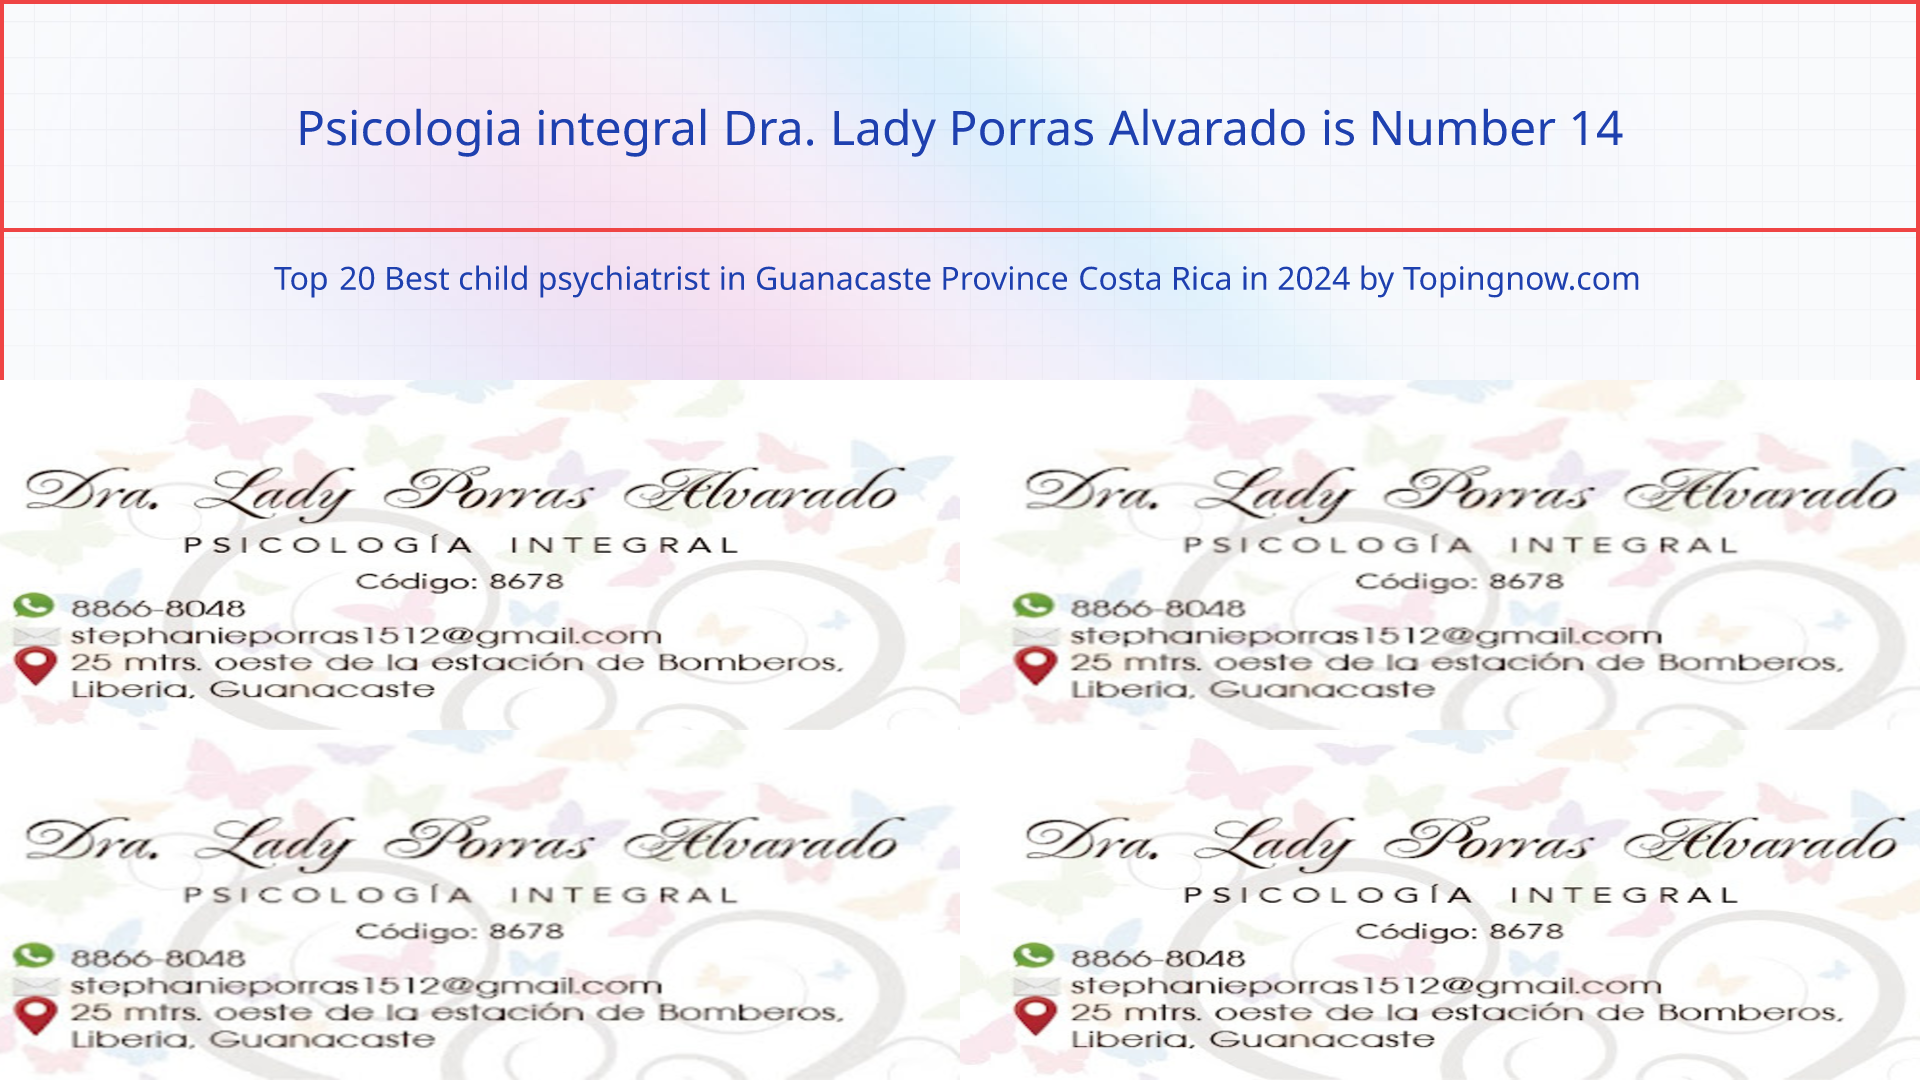 Psicologia integral Dra. Lady Porras Alvarado: Top 20 Best child psychiatrist in Guanacaste Province Costa Rica in 2024